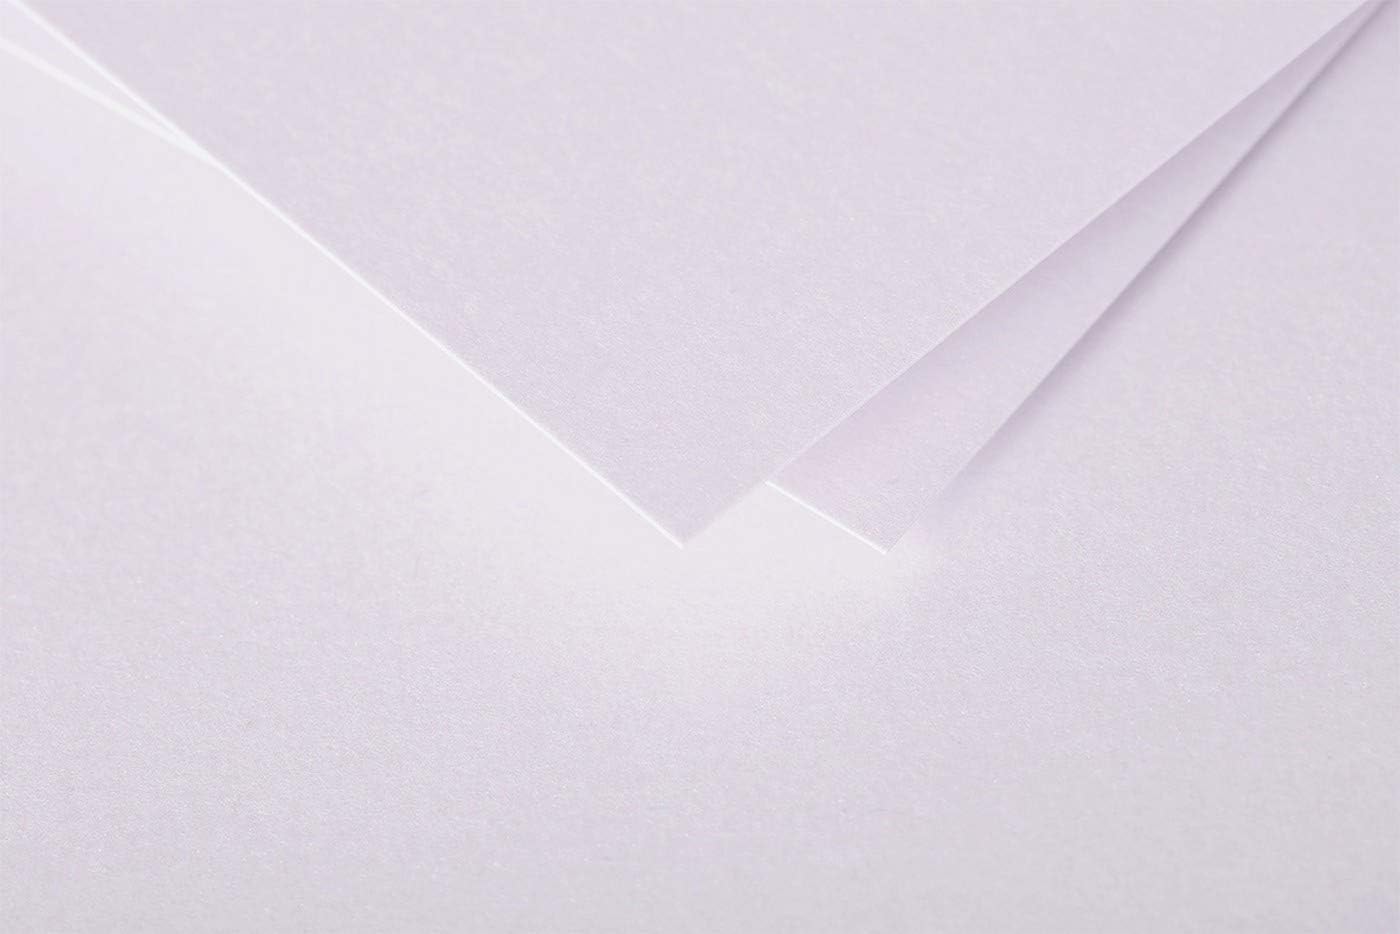 POLLEN Iridescent Envelopes 120g 114x162mm Pink 20s